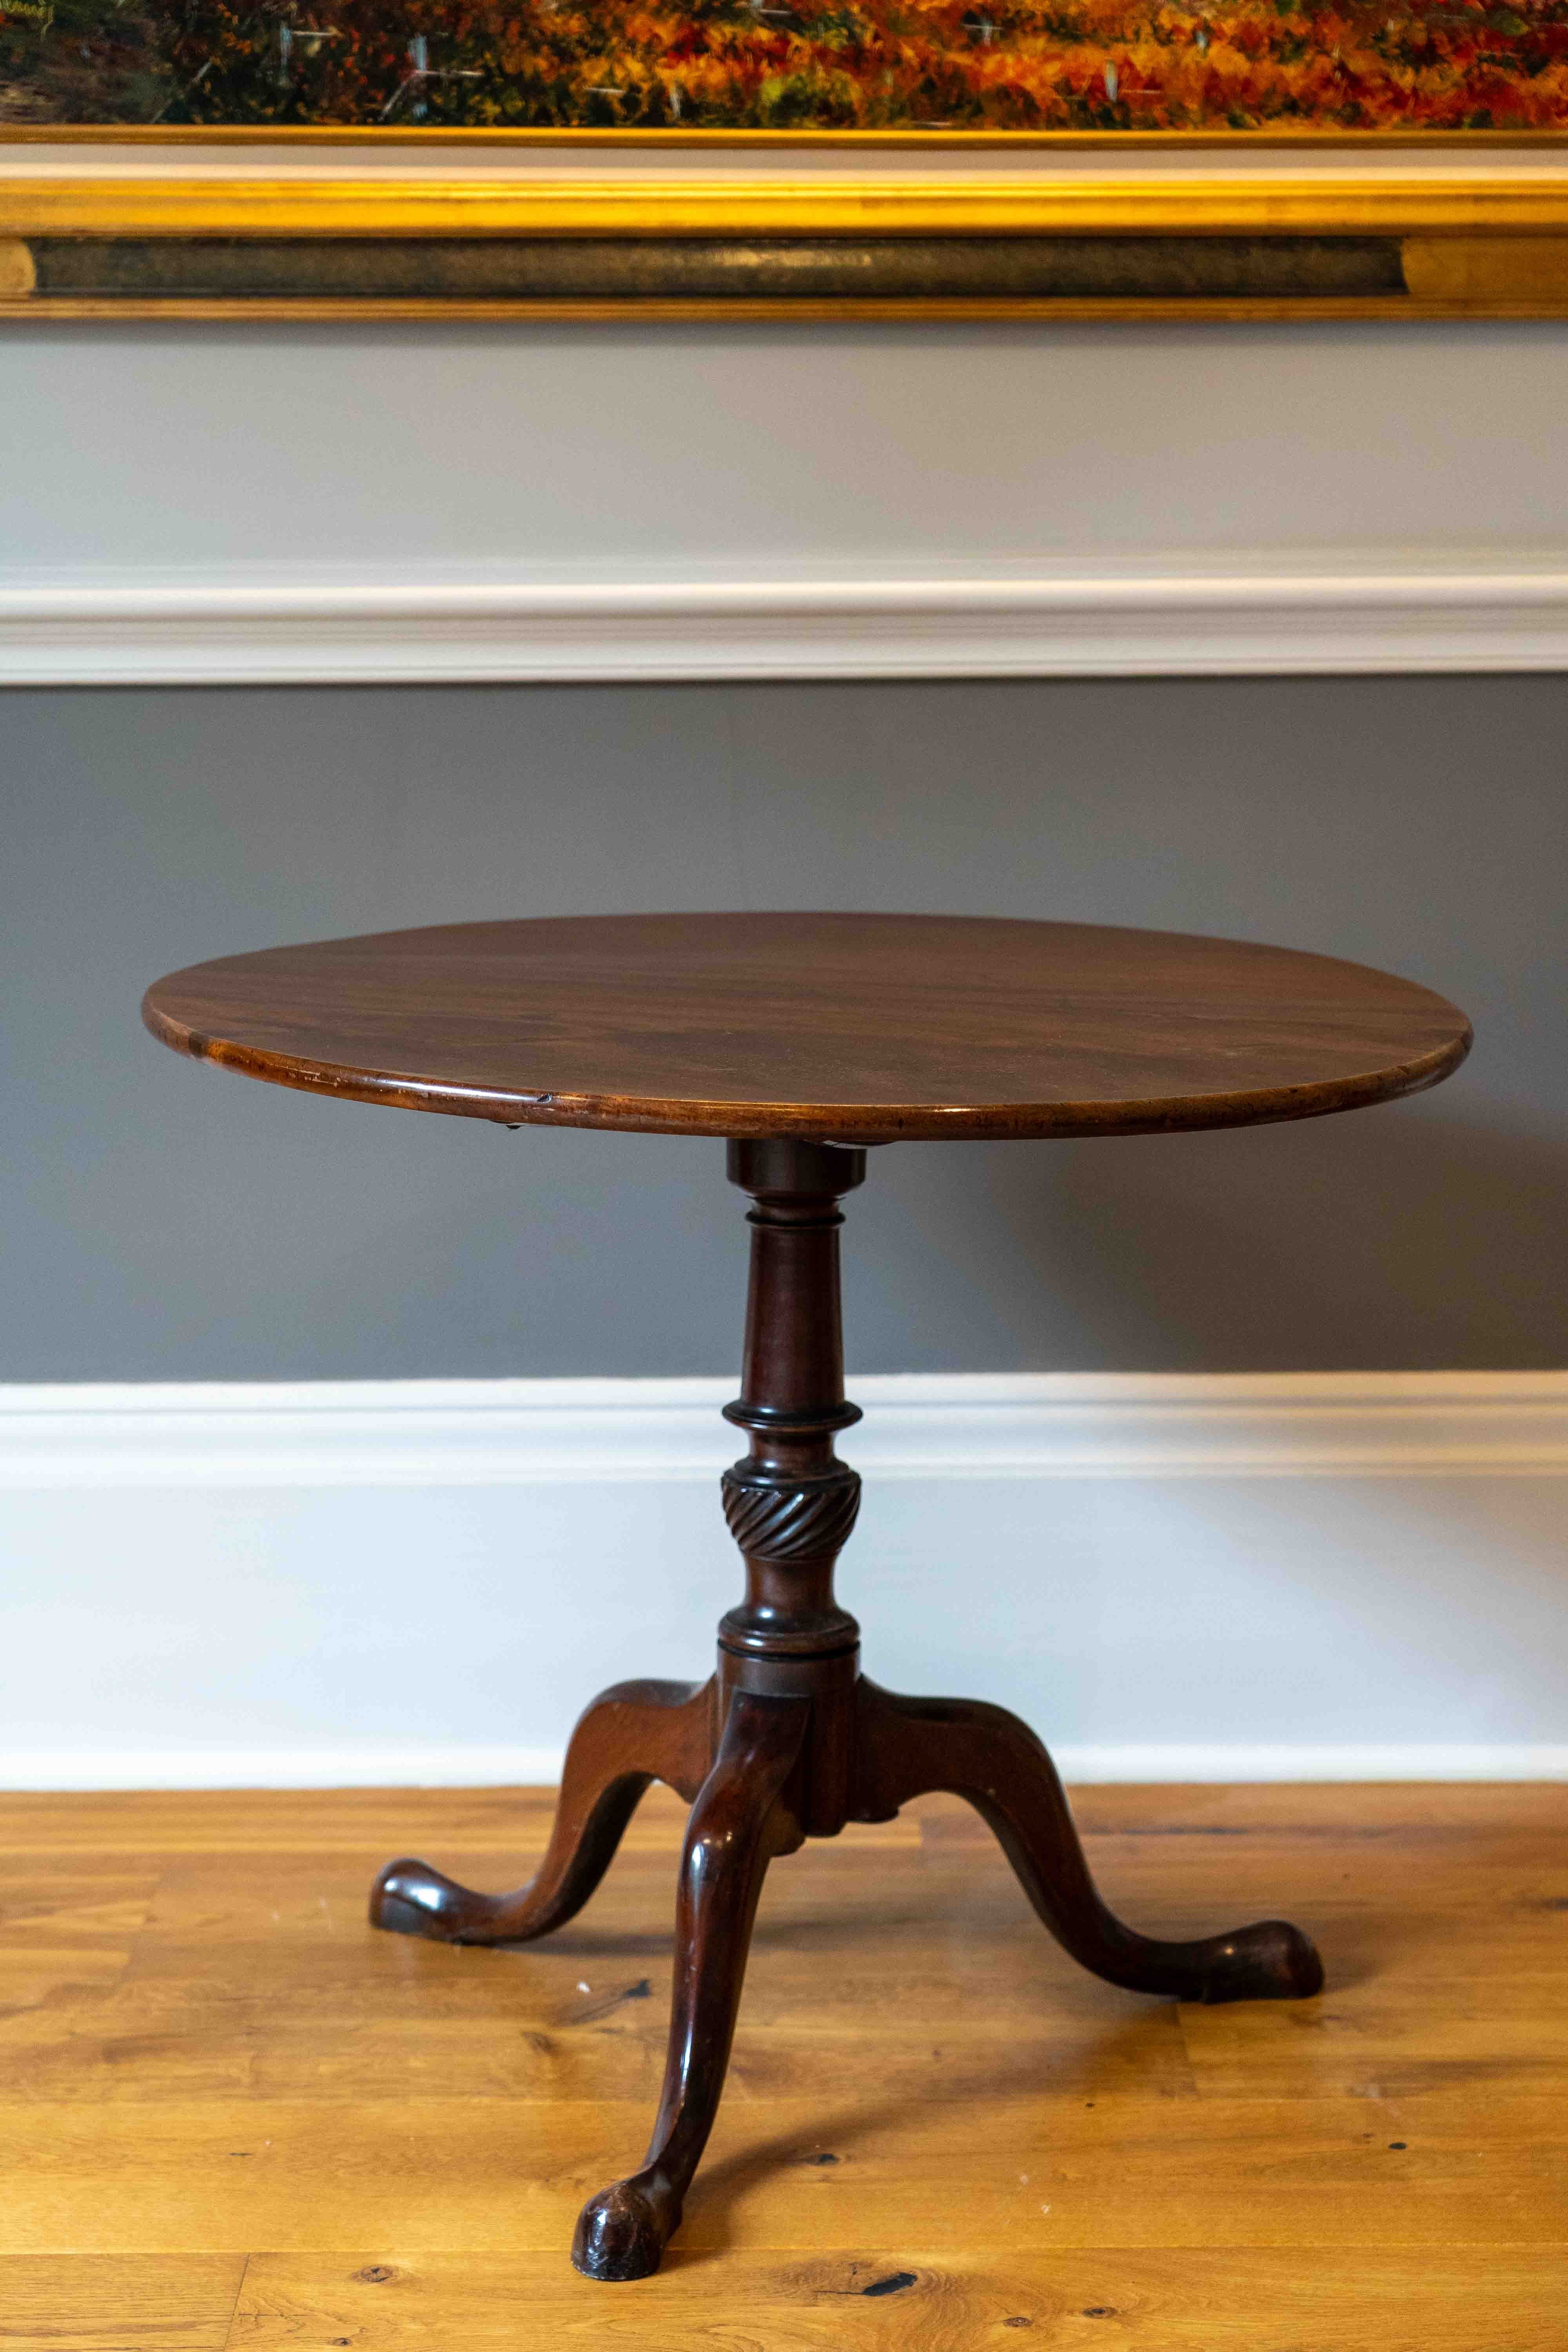 A George III circular mahogany tilt top tripod table, diameter 82cm, height 70cm. Condition - fair